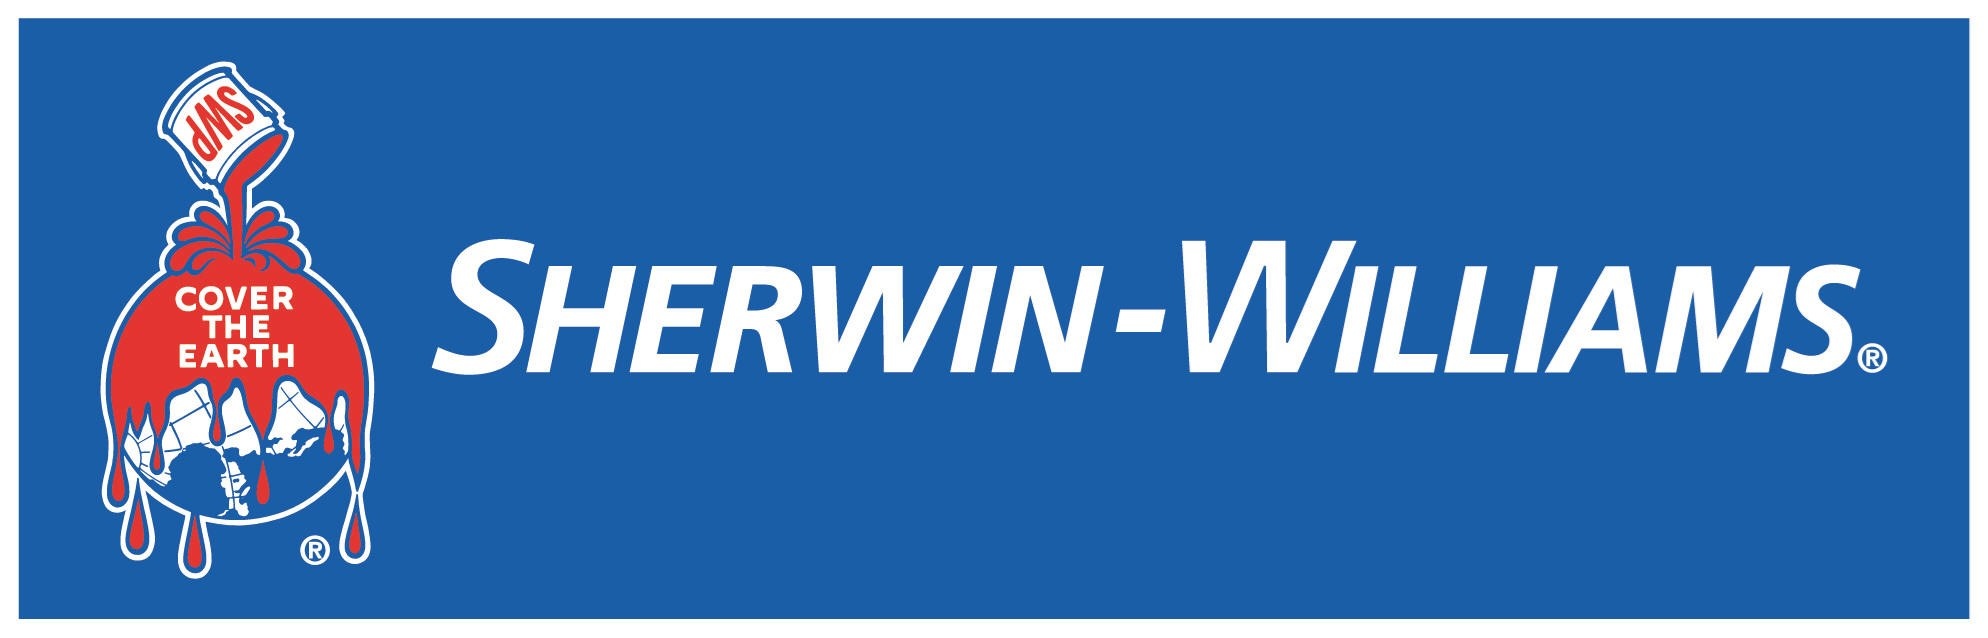 sherwin-williams-logo.jpg